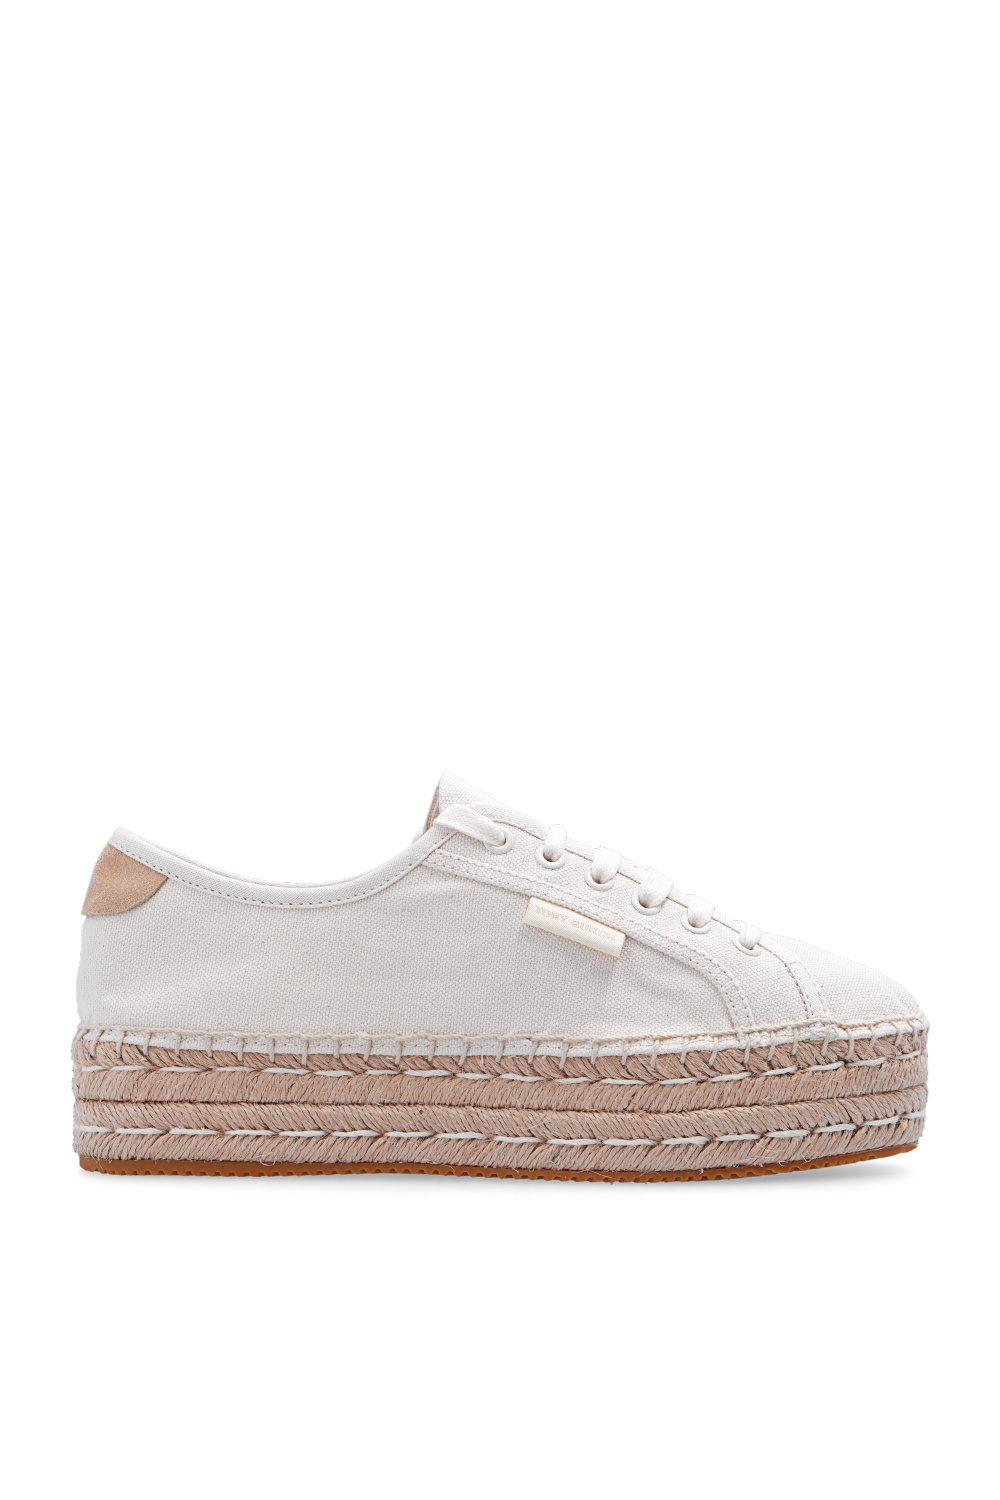 Cream 'Seaside Oxford' platform shoes Tory Burch - Vitkac KR